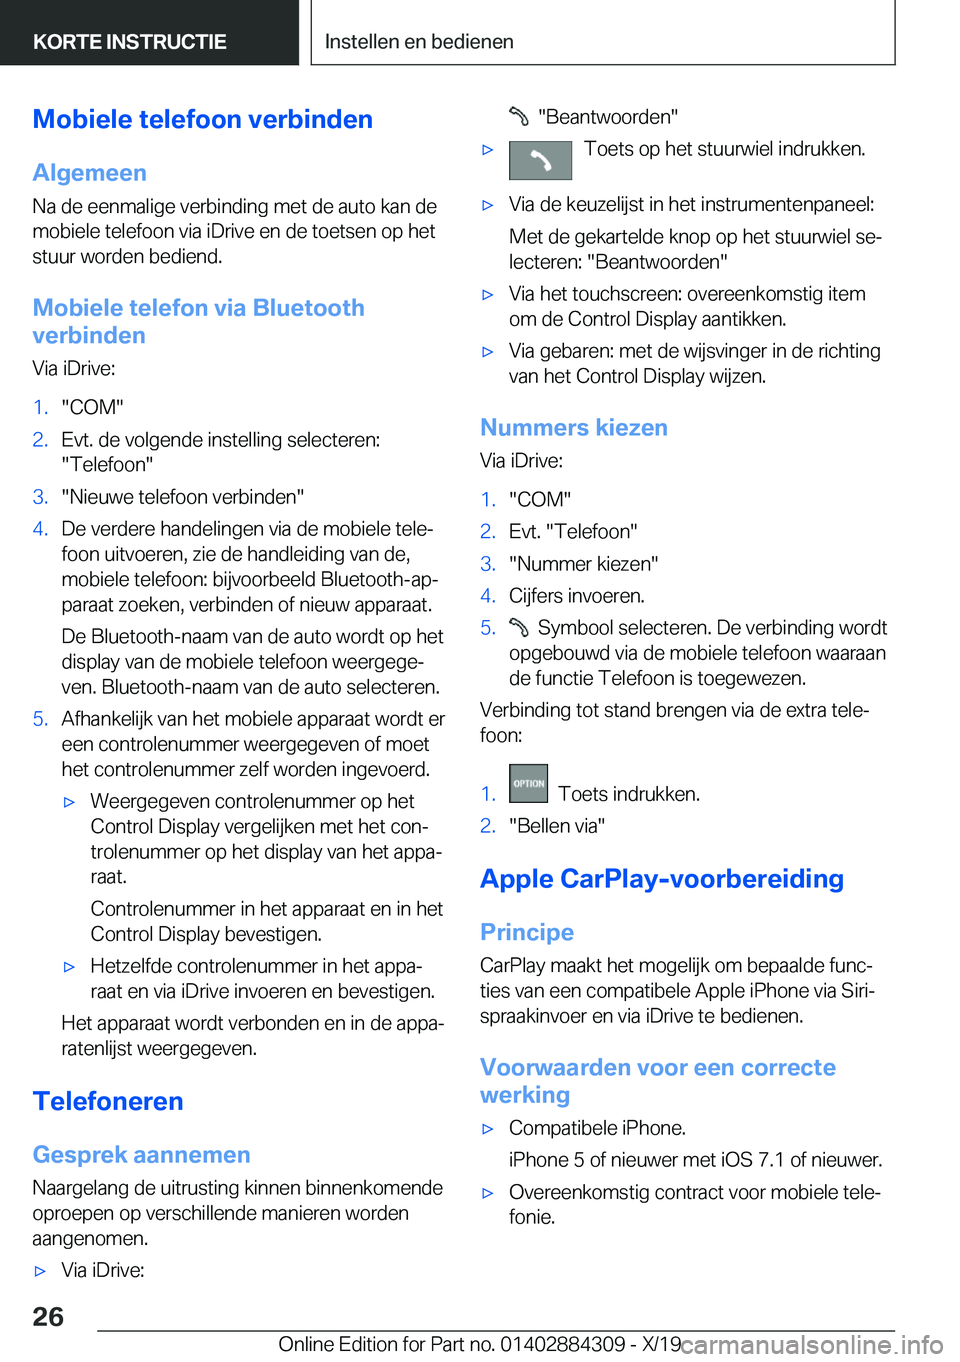 BMW 8 SERIES GRAN COUPE 2020  Instructieboekjes (in Dutch) �M�o�b�i�e�l�e��t�e�l�e�f�o�o�n��v�e�r�b�i�n�d�e�n
�A�l�g�e�m�e�e�n �N�a��d�e��e�e�n�m�a�l�i�g�e��v�e�r�b�i�n�d�i�n�g��m�e�t��d�e��a�u�t�o��k�a�n��d�e�m�o�b�i�e�l�e��t�e�l�e�f�o�o�n��v�i�a